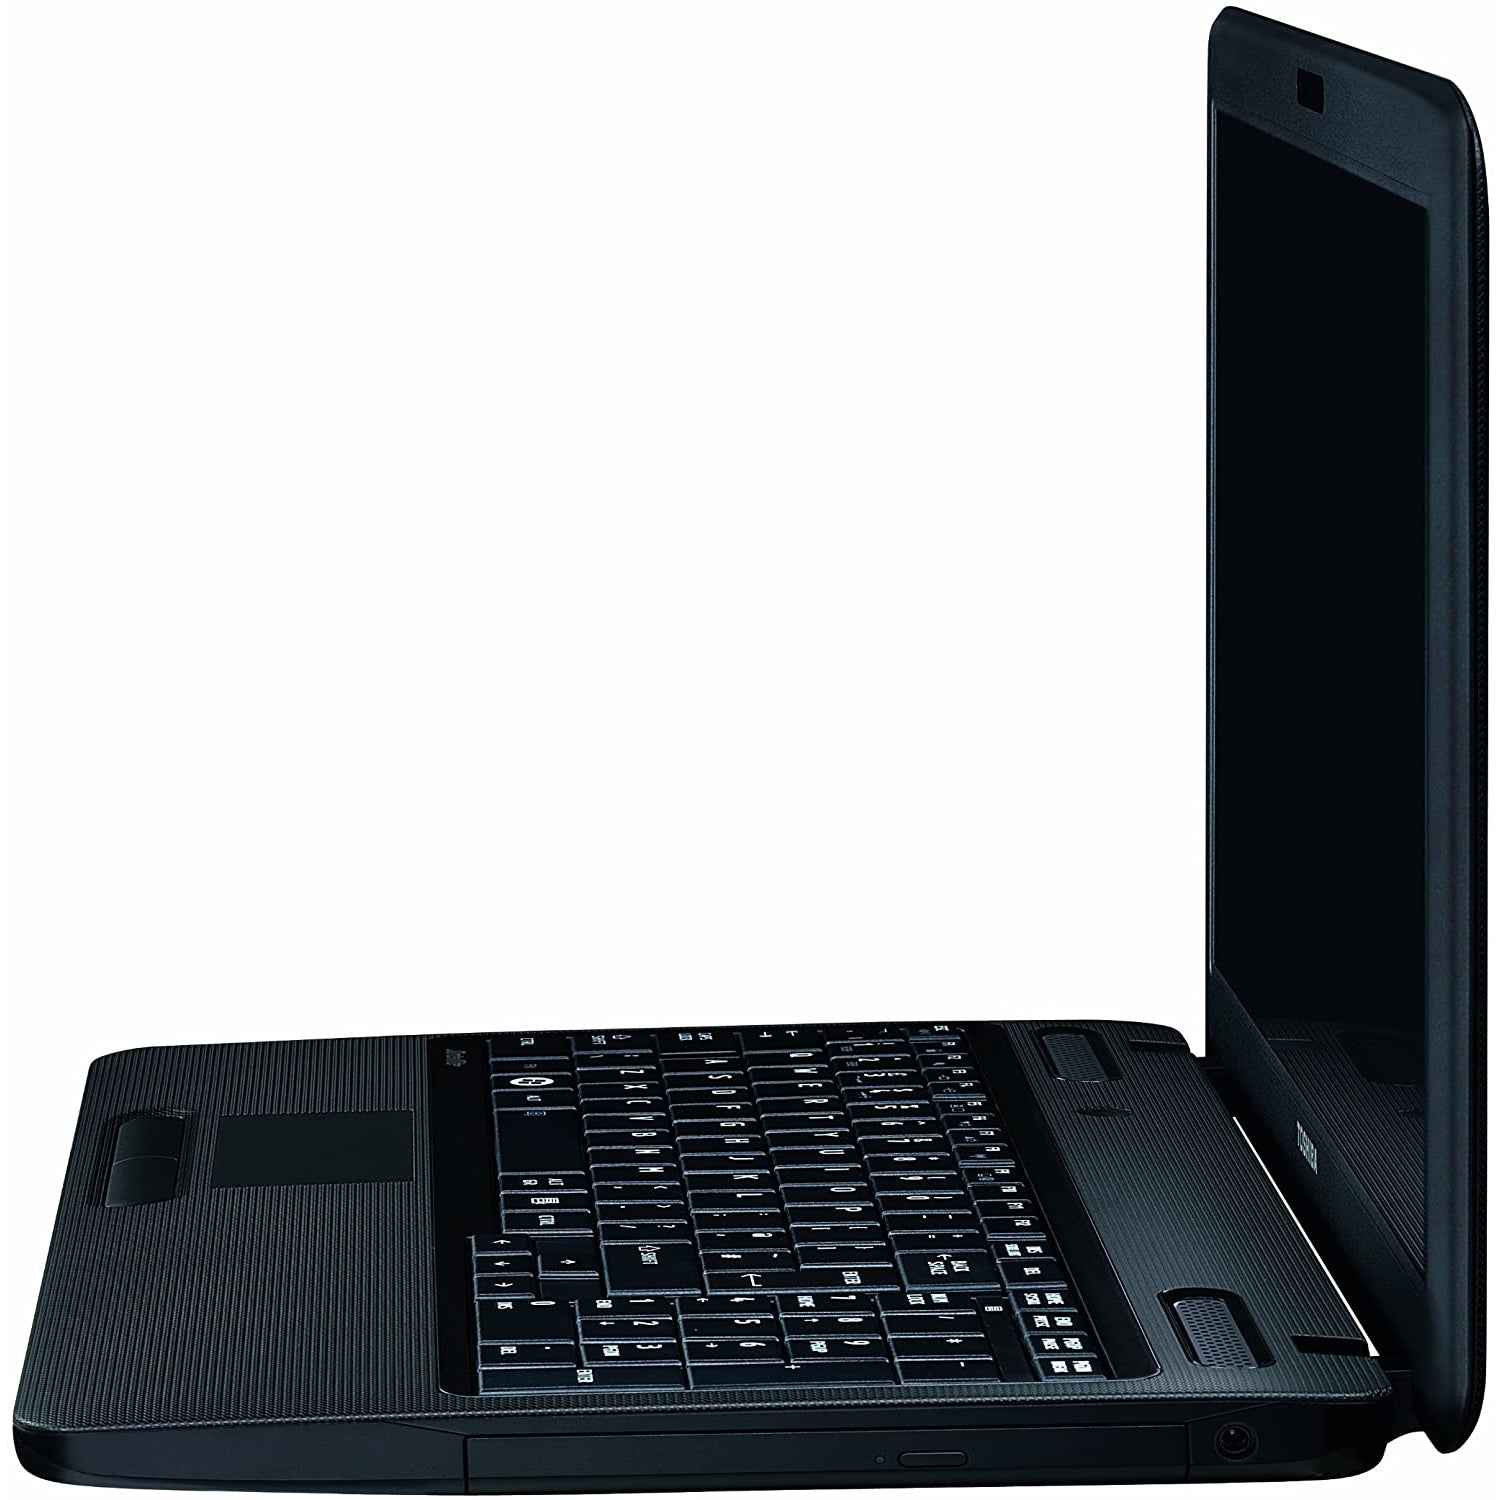 Toshiba Satellite C660-2KO 15.6 inch Laptop (Intel Core i3-2350M, 2.30GHz, RAM 4GB, HDD 500GB, Windows 7 Home) Black